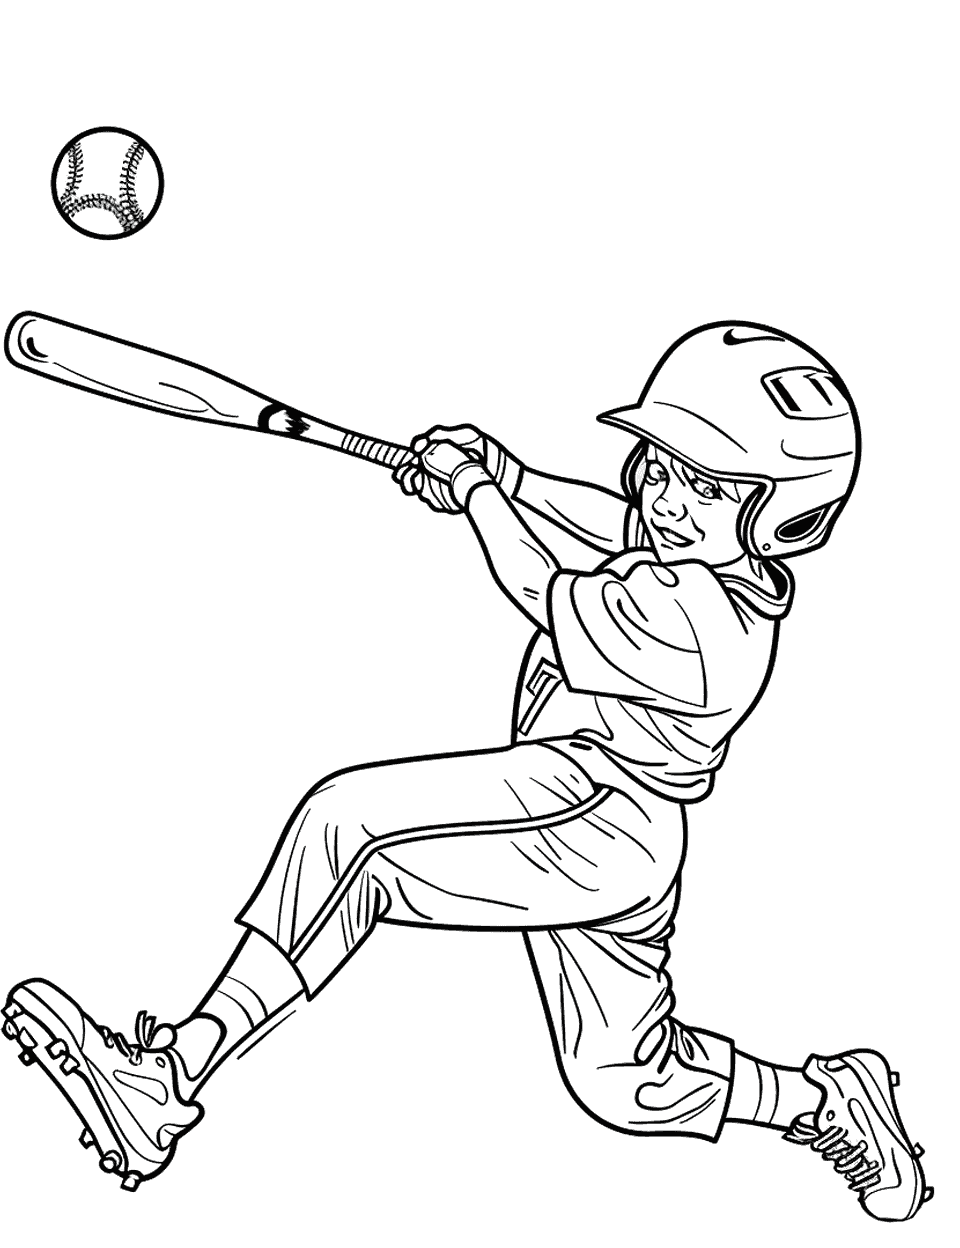 Baseball Home Run Sports Coloring Page - A batter swinging at a baseball, aiming for a home run.